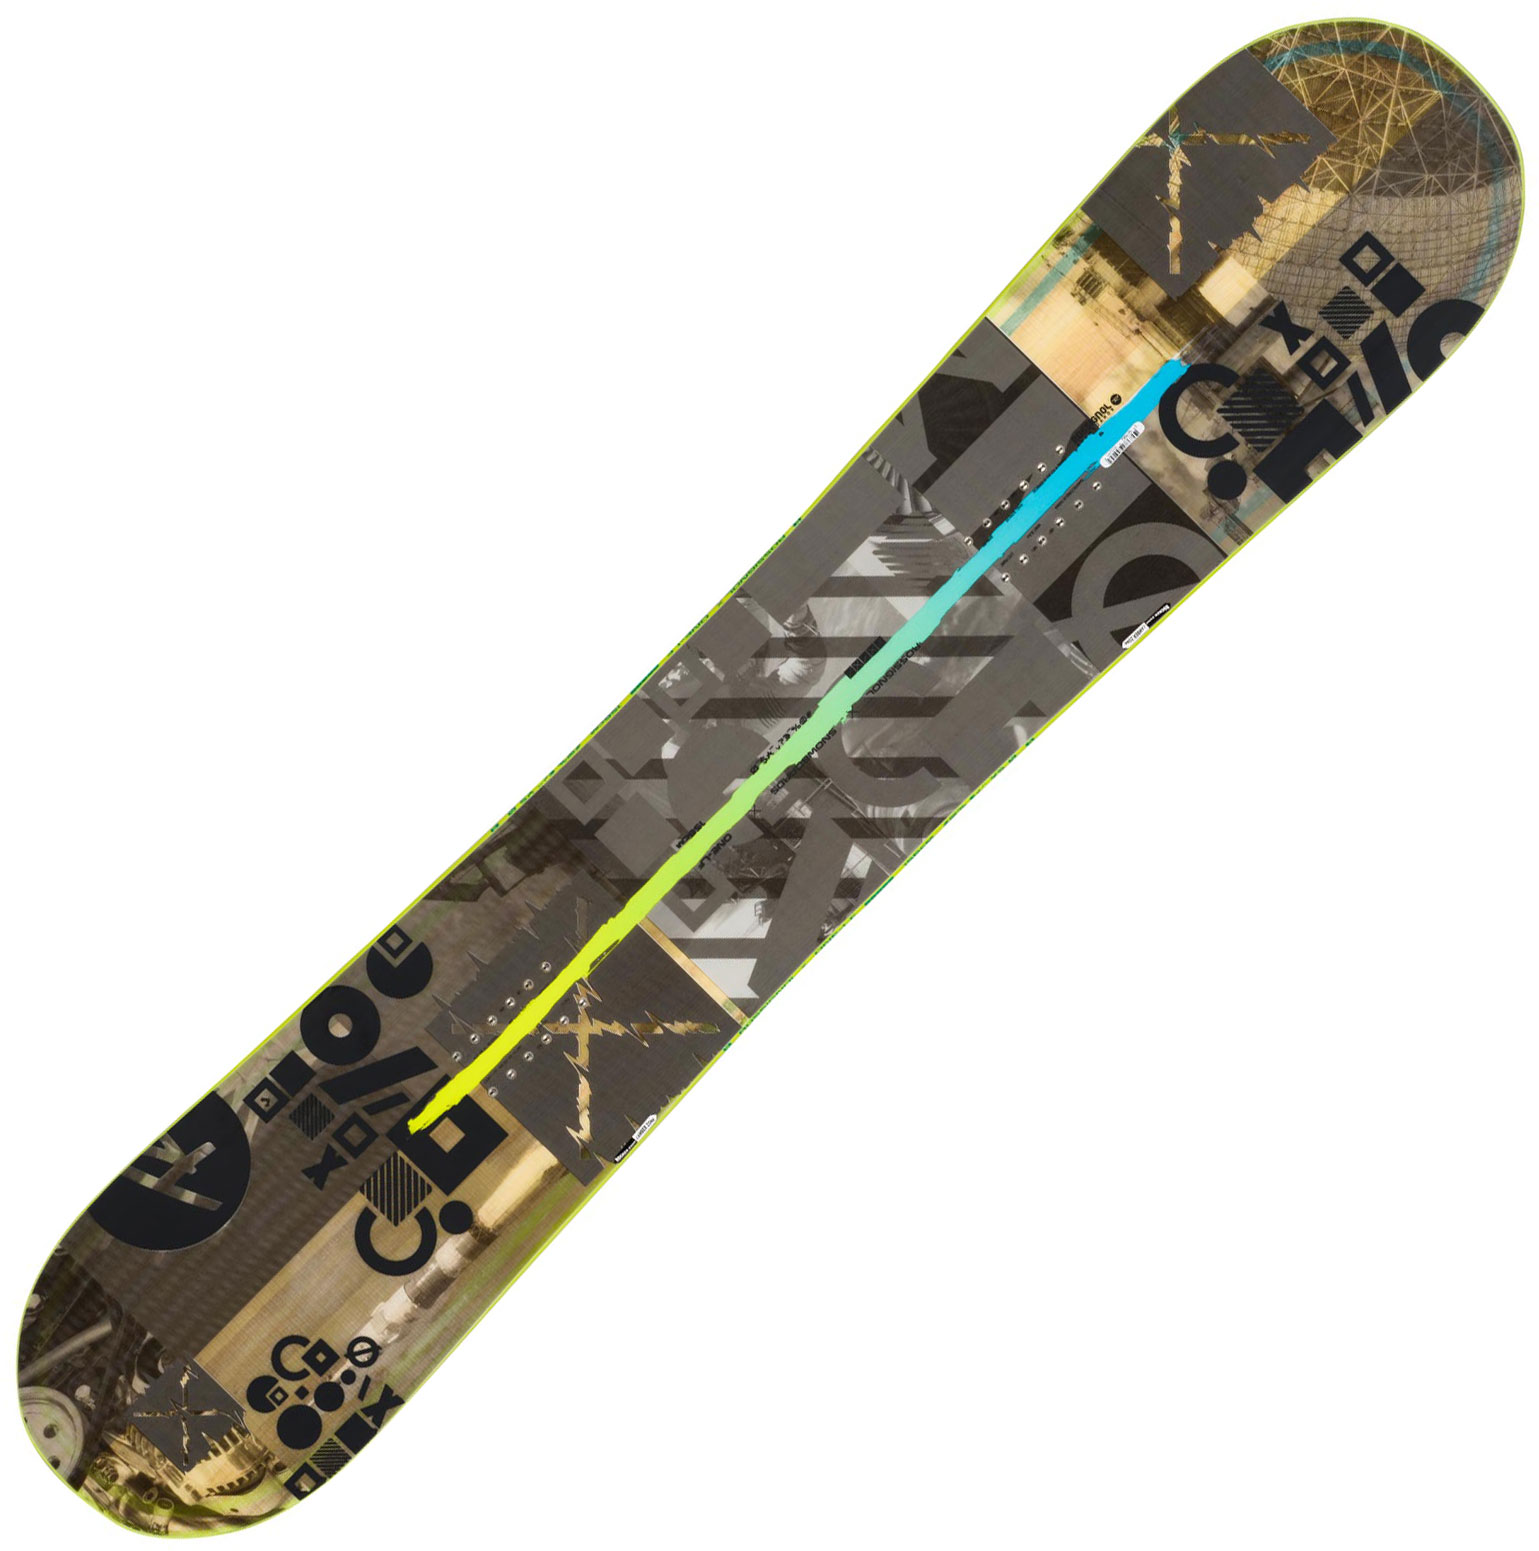 Men's snowboard set